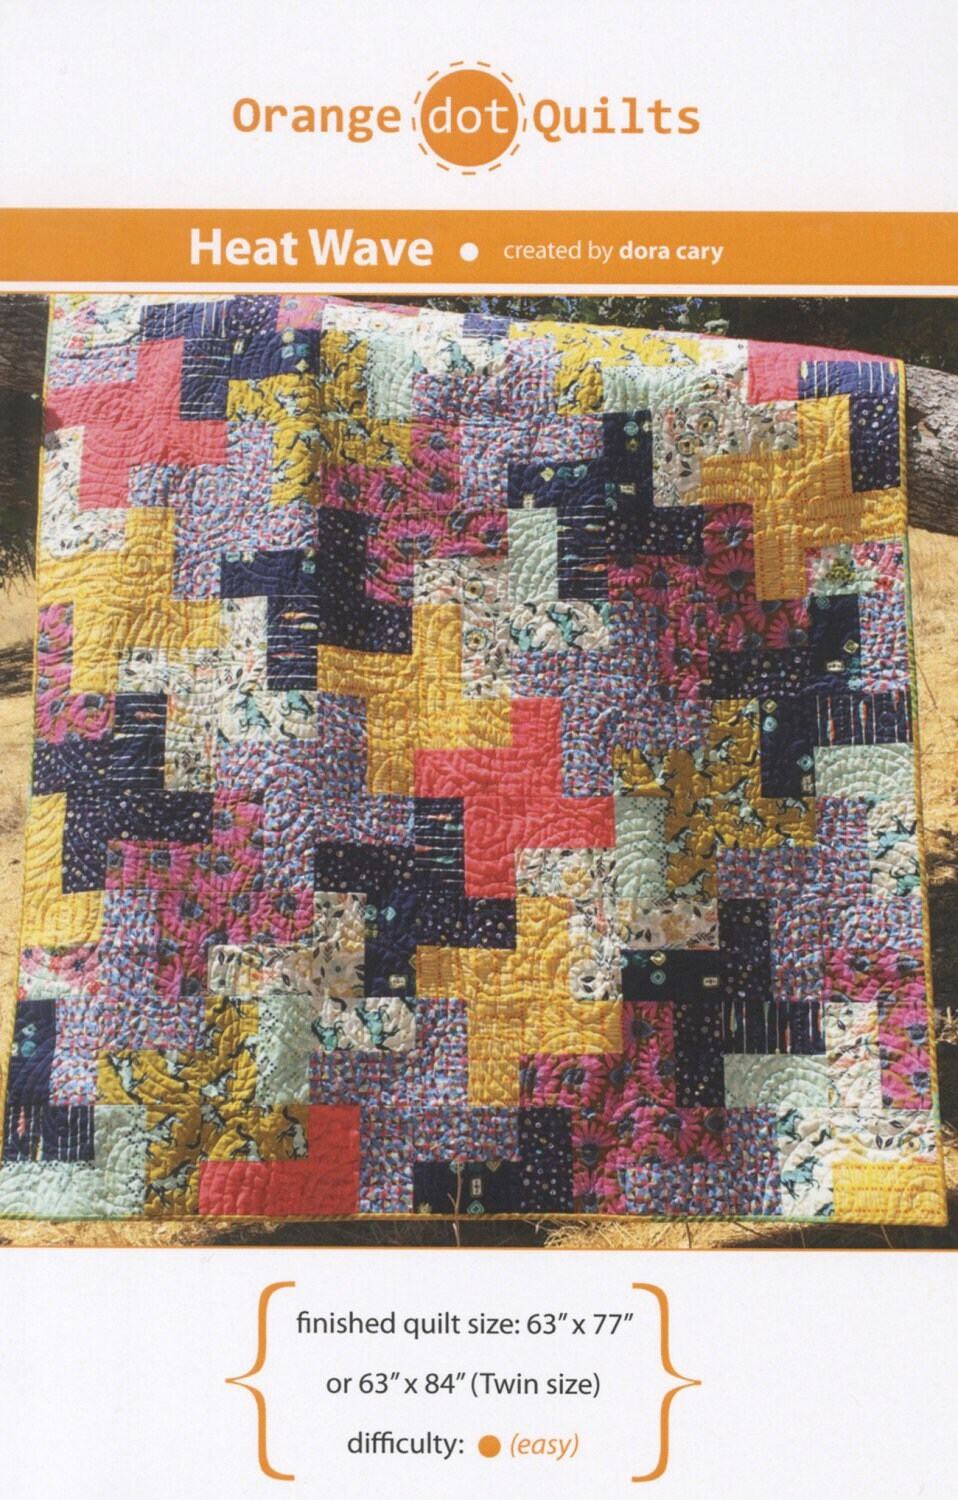 Heatwave Quilt Pattern - Orange Dot Quilts - Dora Cary - Easy Quilt Pattern